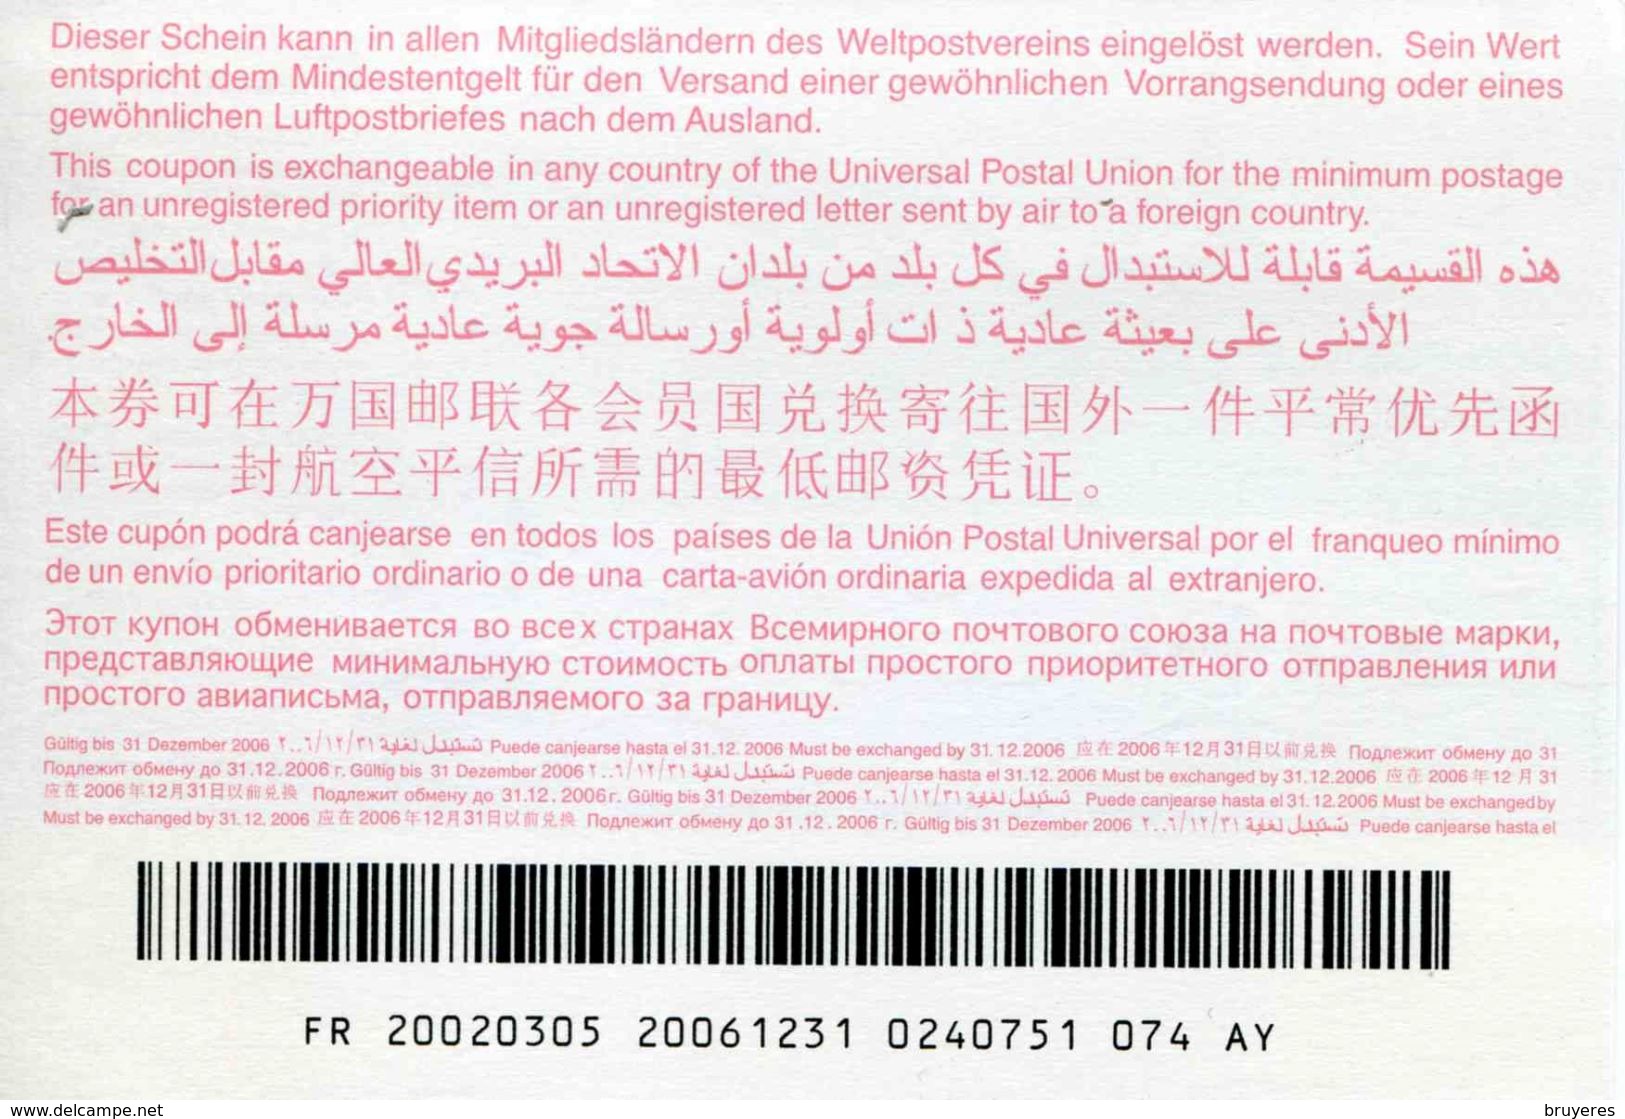 COUPON-REPONSE INTERNATIONAL (FR - FRANCE) - CN 01 - Validité 31.12.2006 - Coupons-réponse